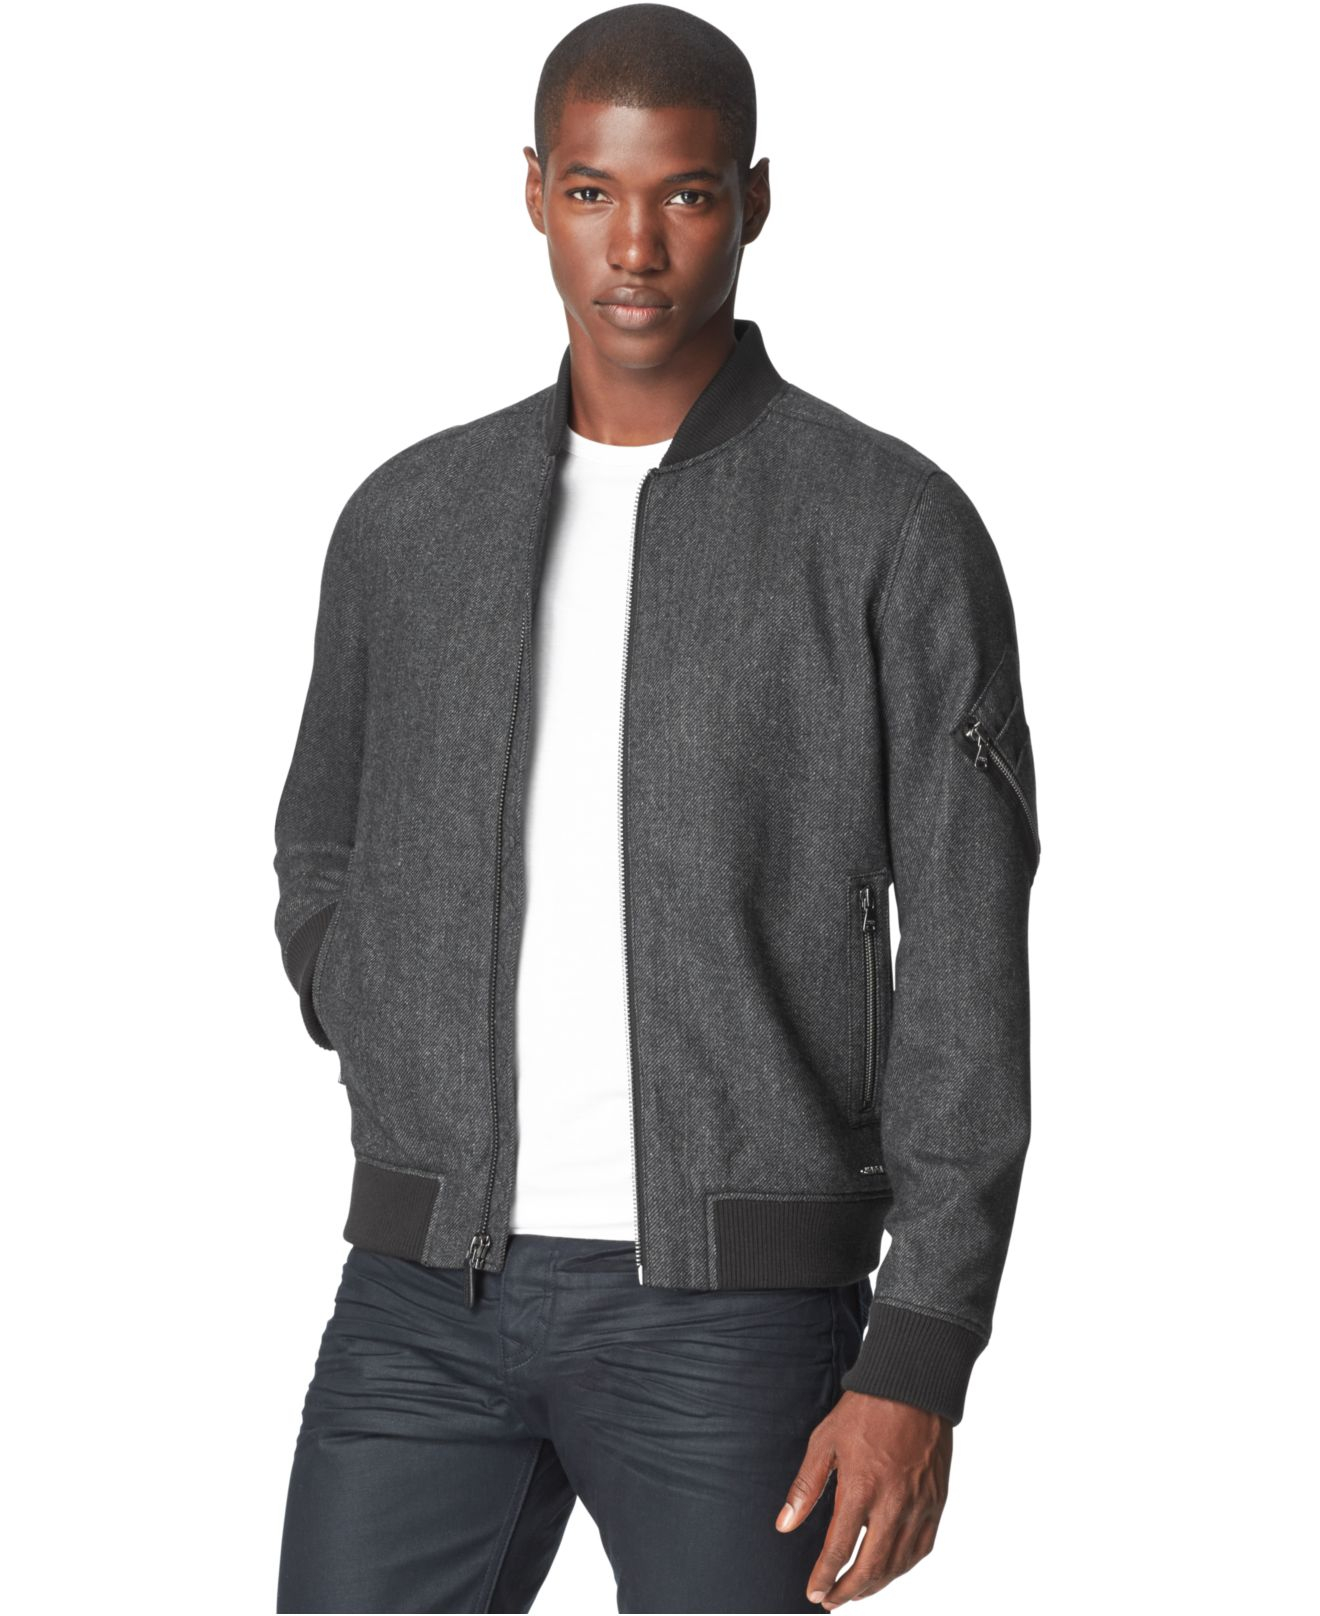 Calvin Klein Wool-Blend Bomber Jacket in Gray for Men - Lyst